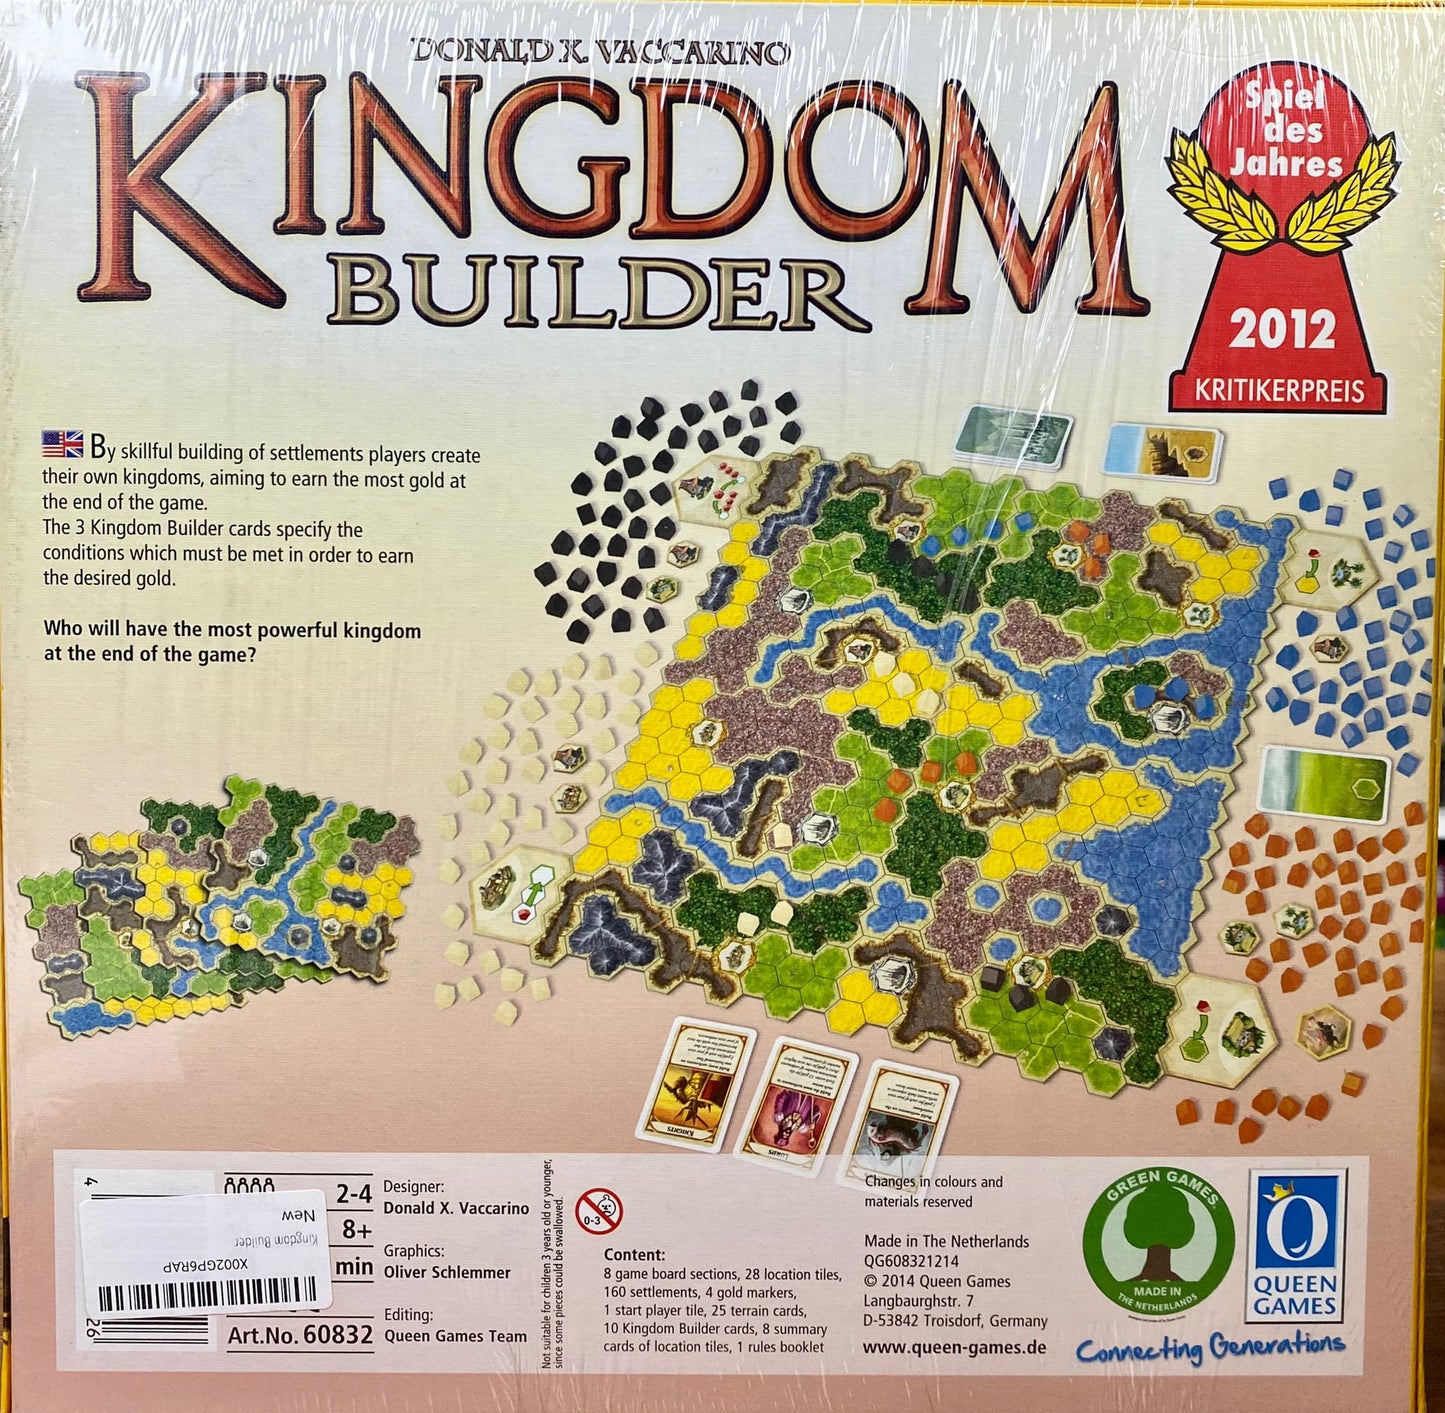 Kingdom Builder